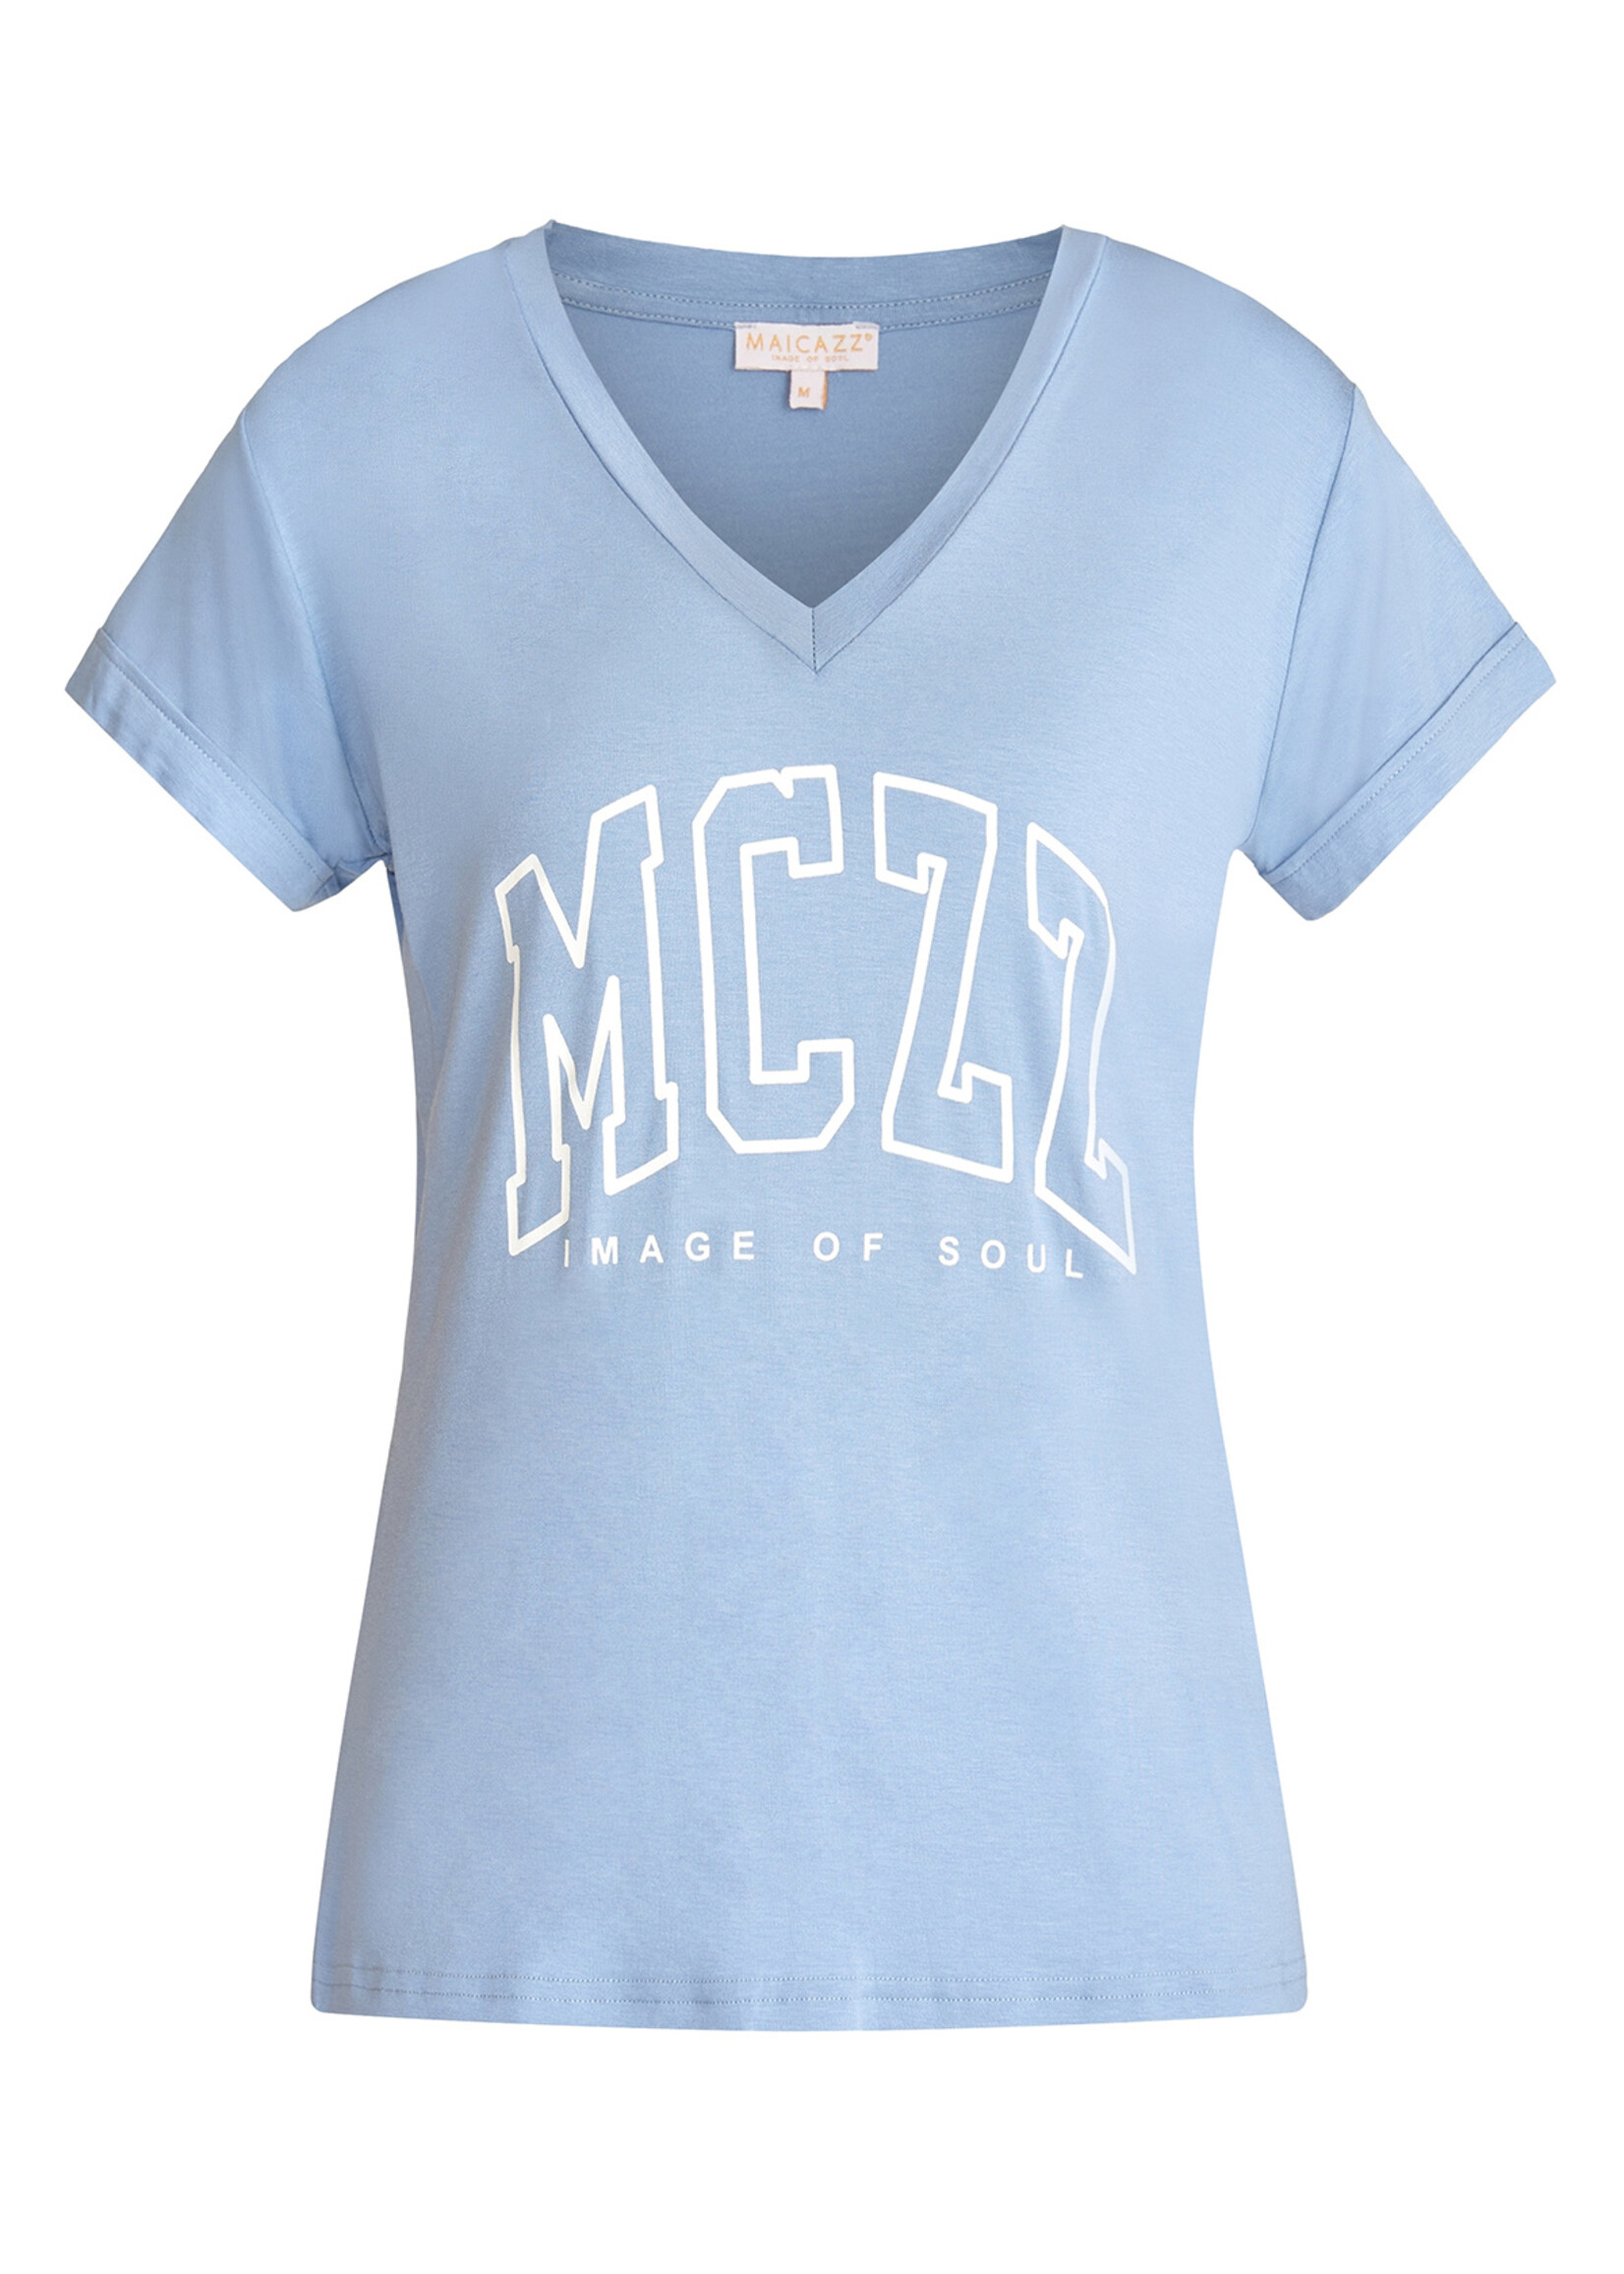 Maicazz T-shirt samantha sparkle blue d2